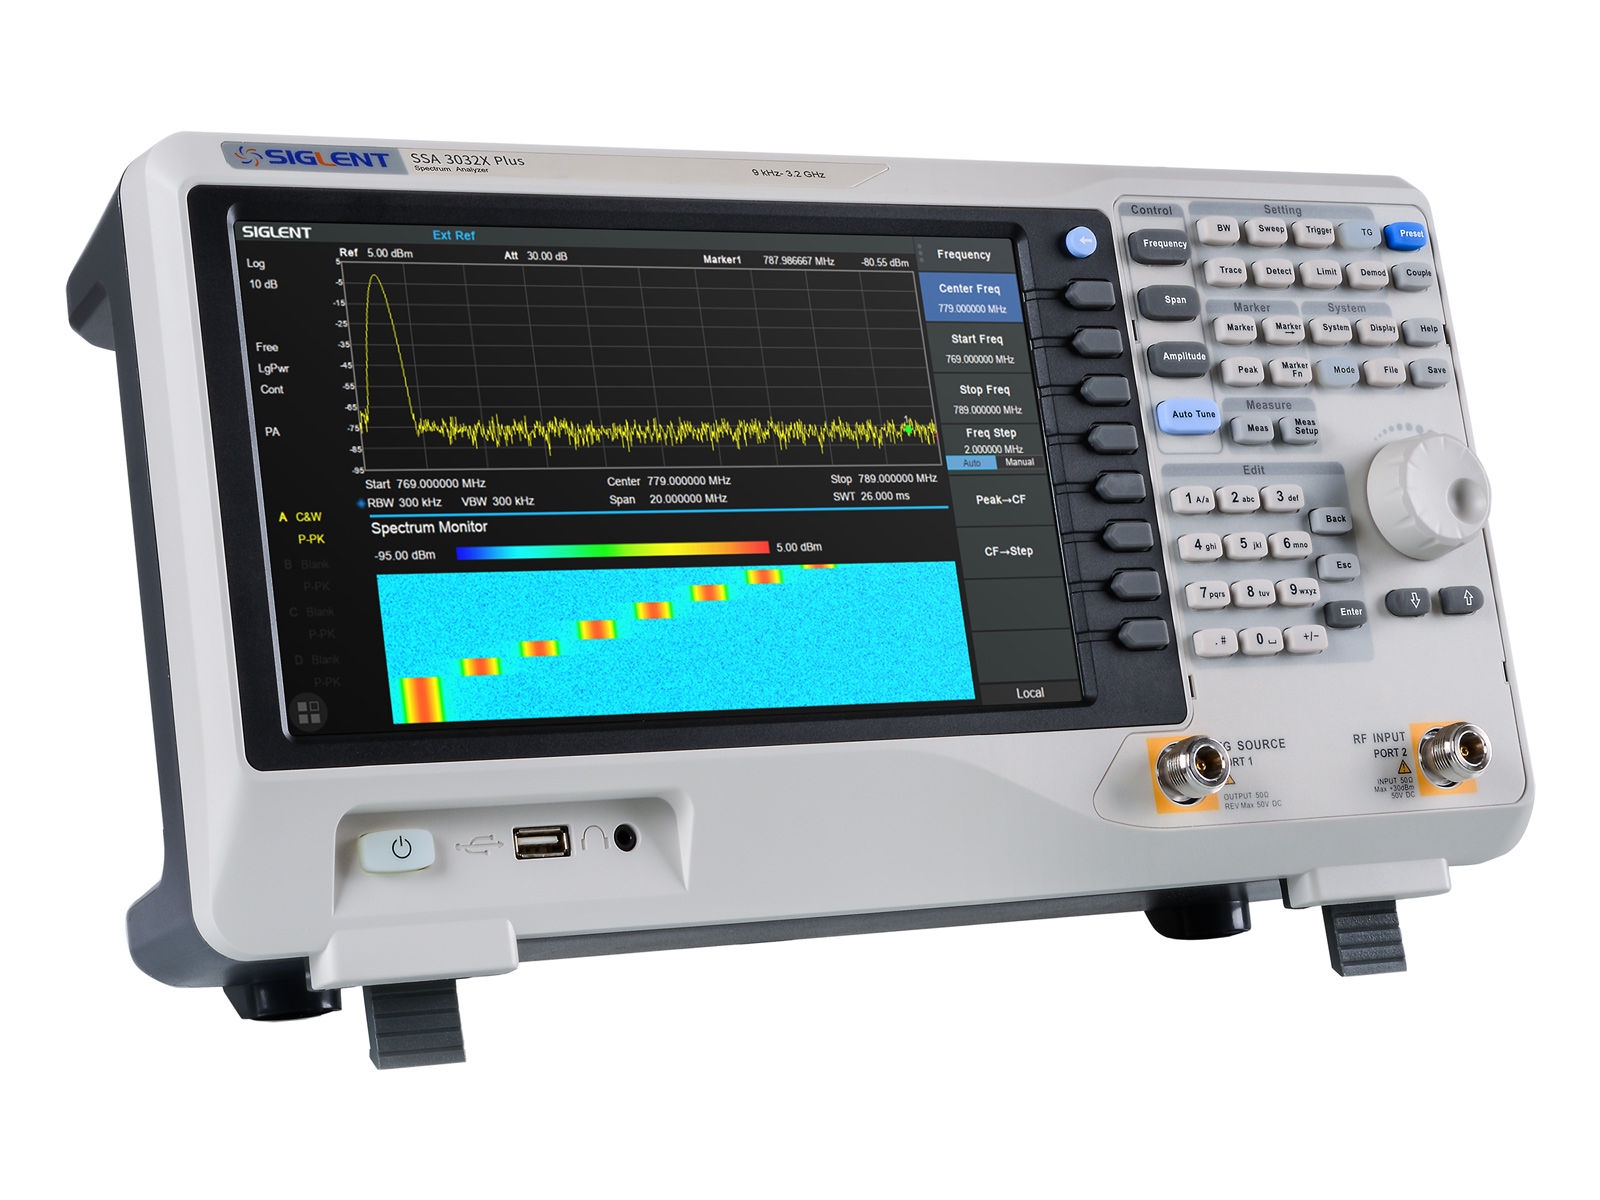 Spektrumanalysator 3.2GHz SSA3032X Plus (inkl TG) @ electrokit (6 av 6)